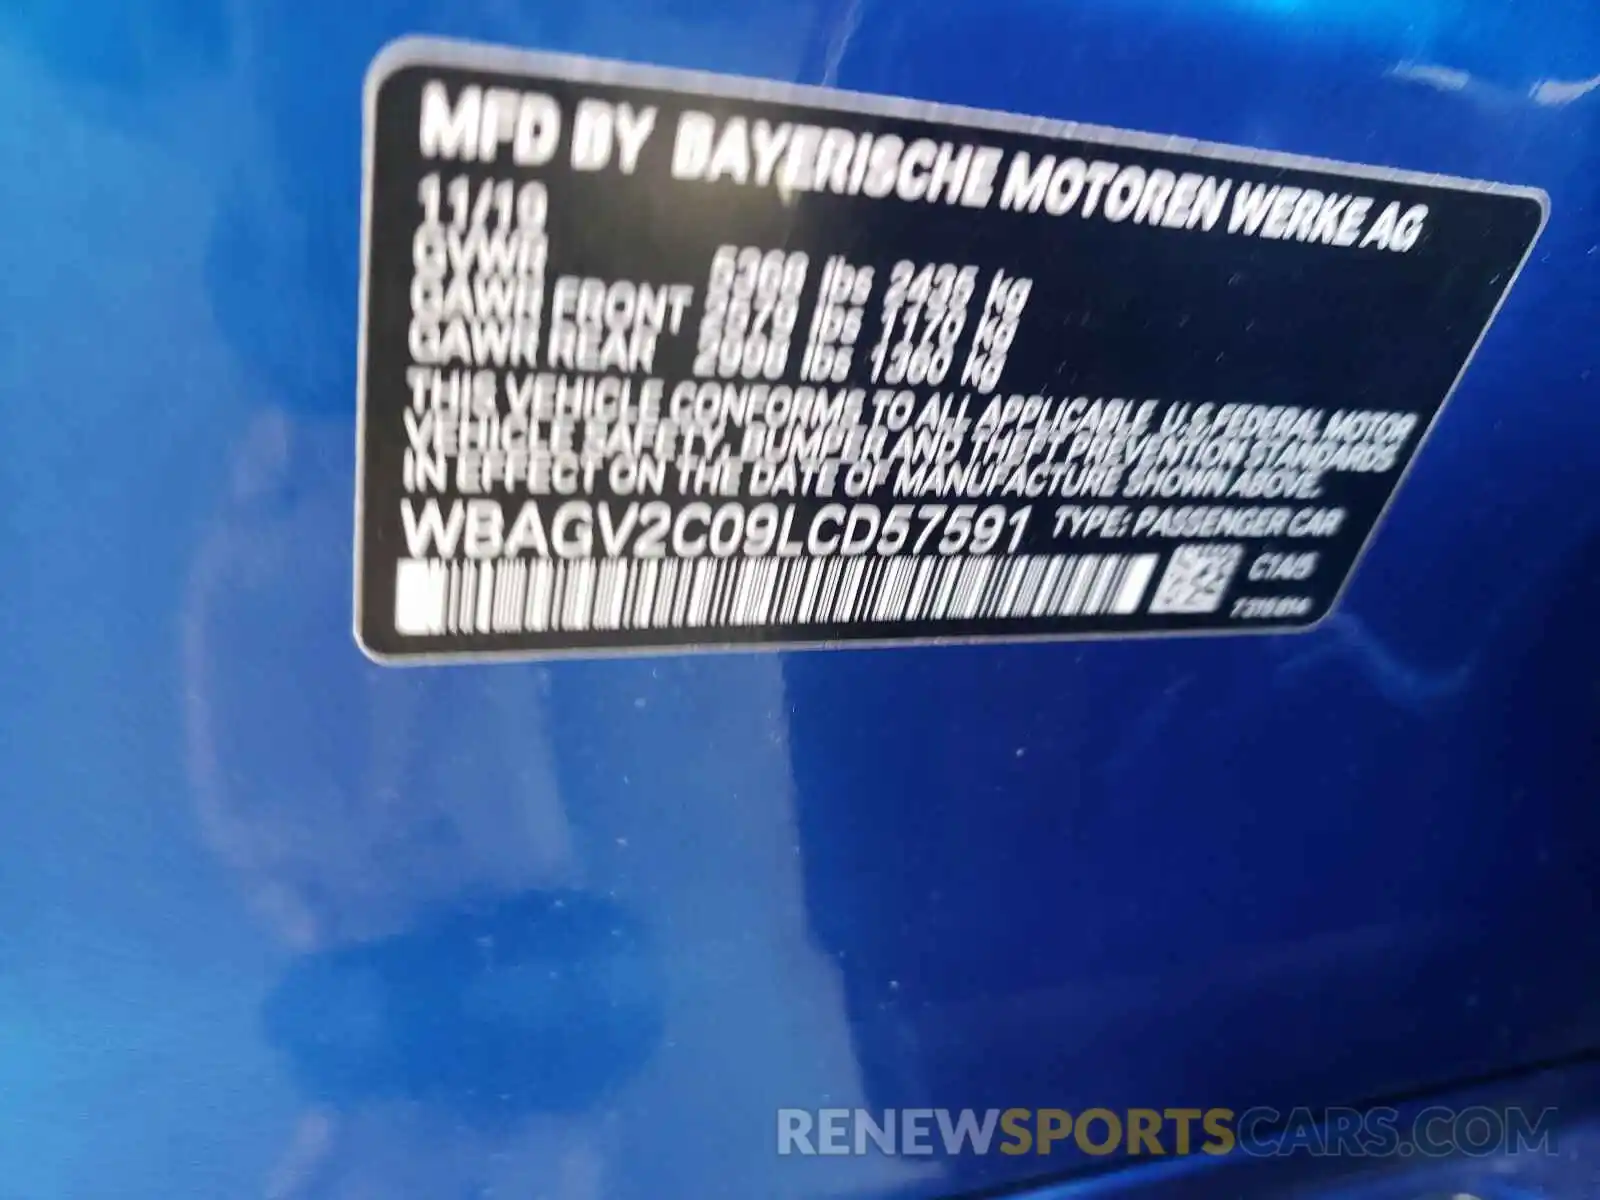 10 Photograph of a damaged car WBAGV2C09LCD57591 BMW 8 SERIES 2020